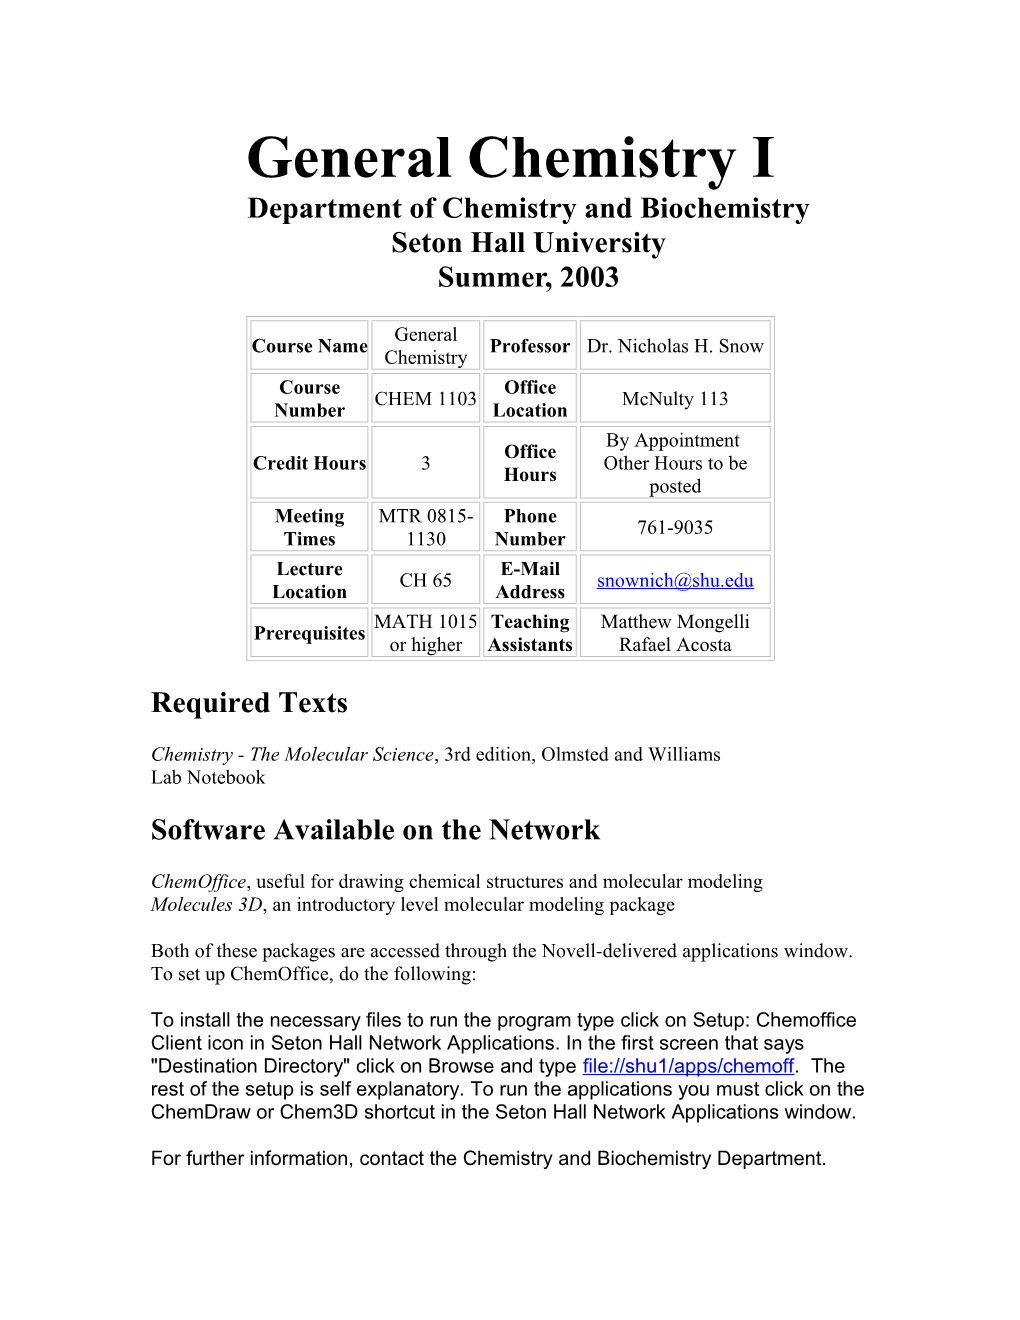 General Chemistry Idepartment of Chemistry and Biochemistryseton Hall Universitysummer, 2003